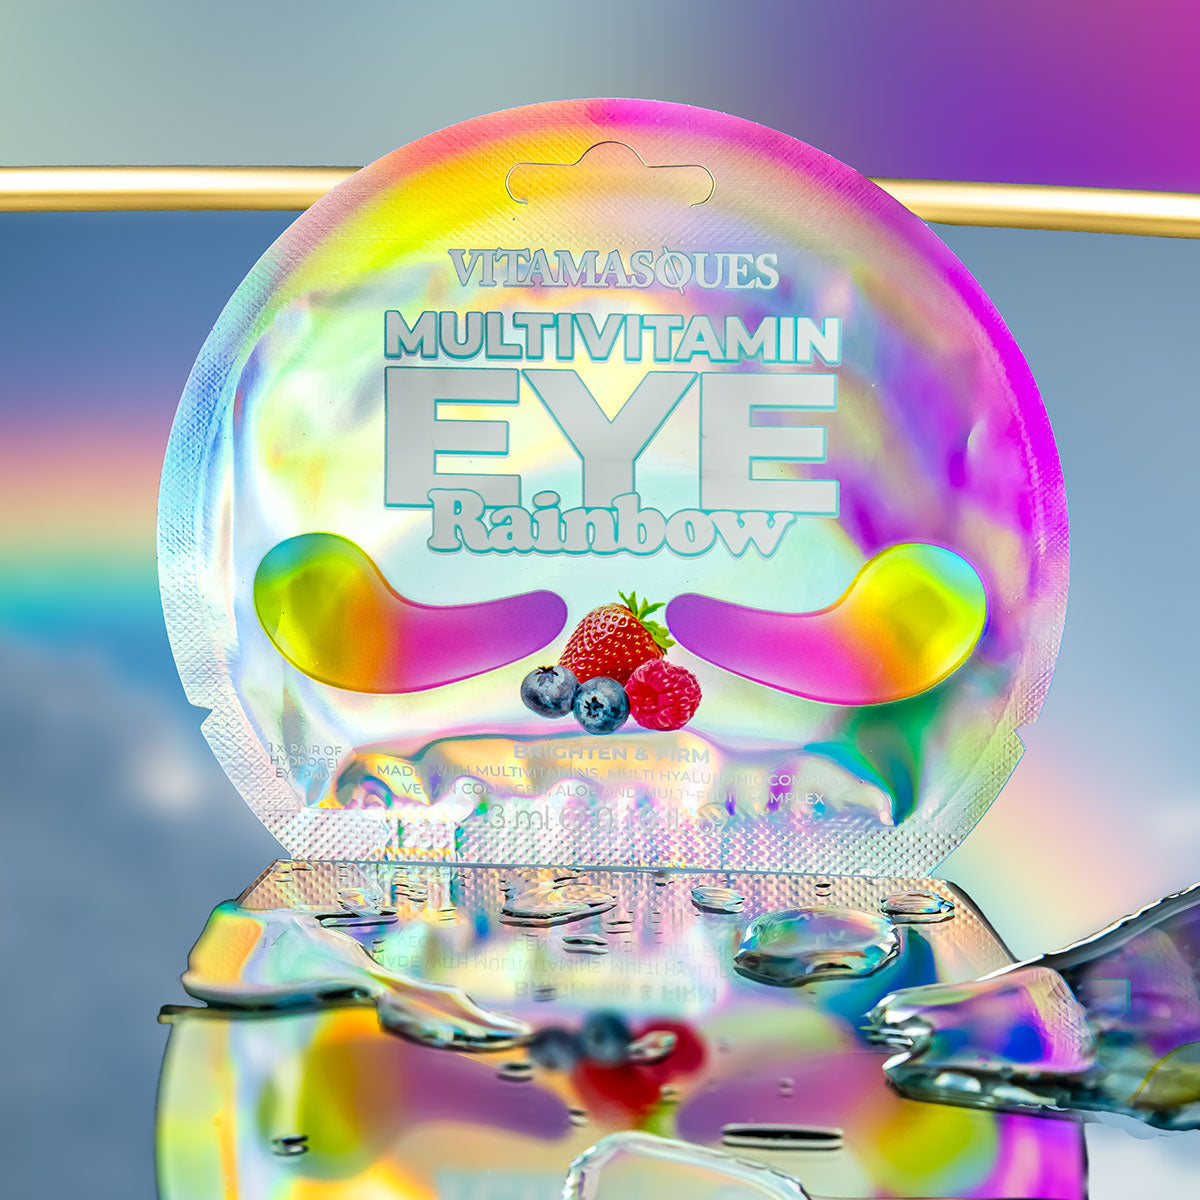 Multivitamin Eye Rainbow Eye Pads